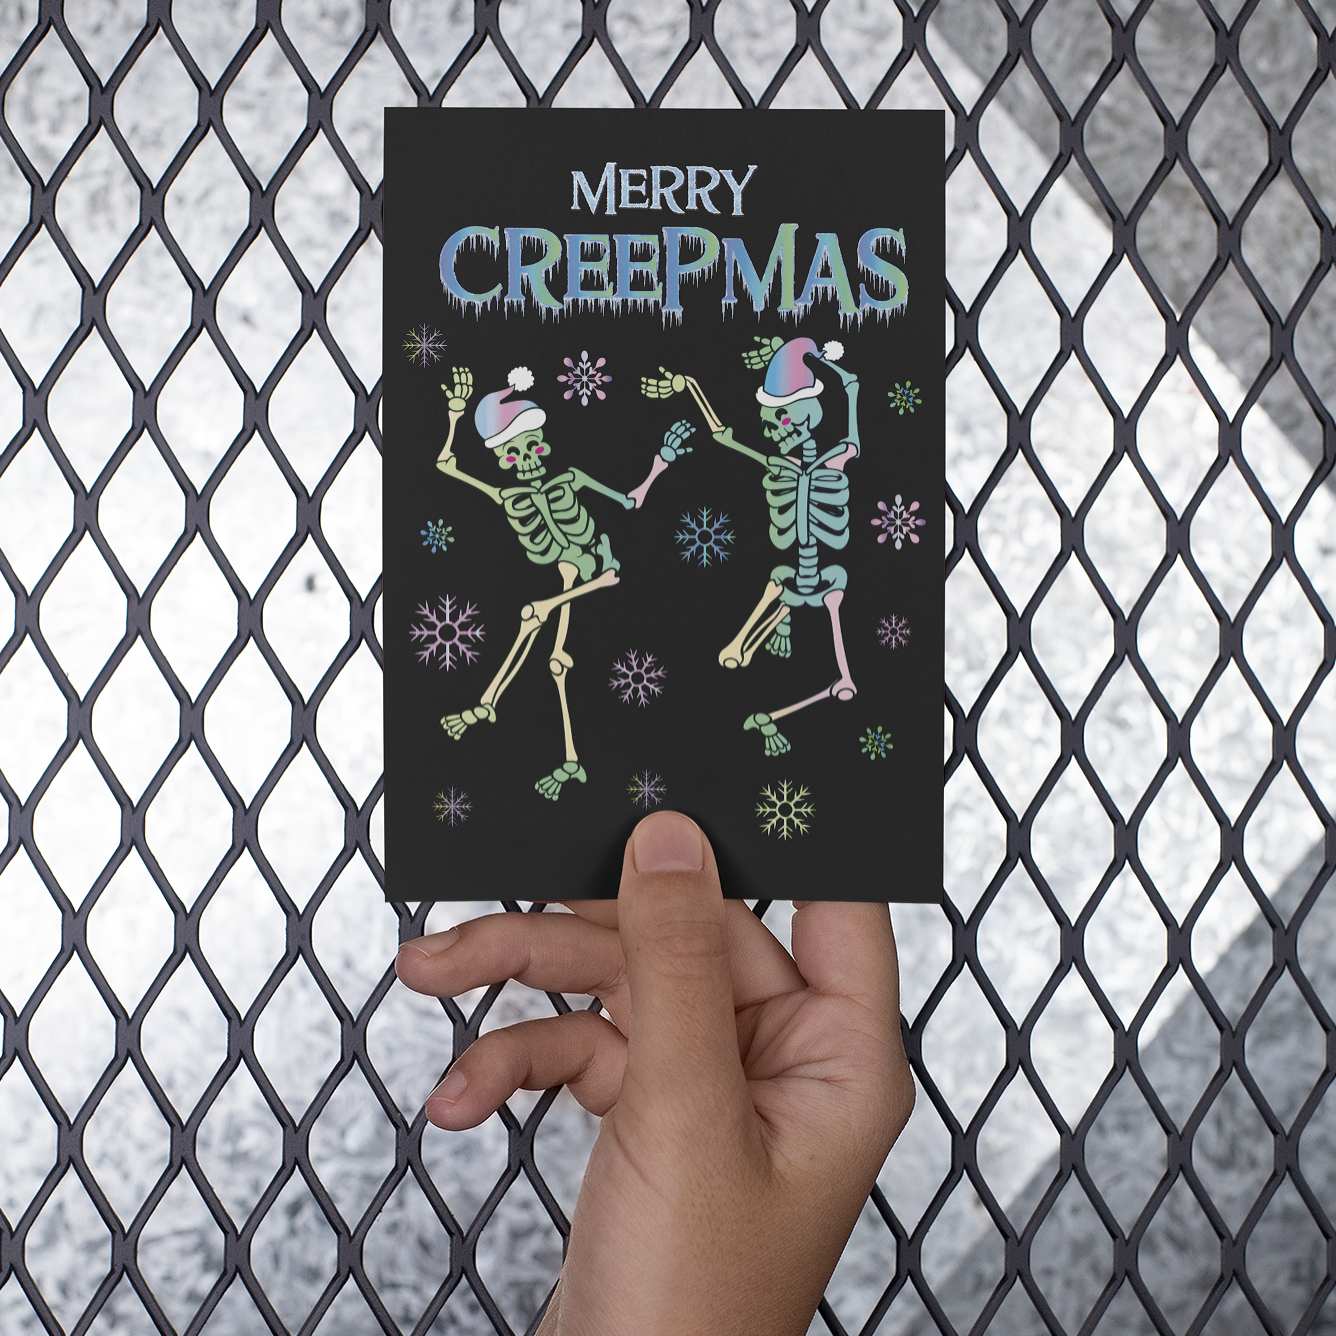 Merry Creepmas Dancing Skeleton Pastel Holiday Greeting Card